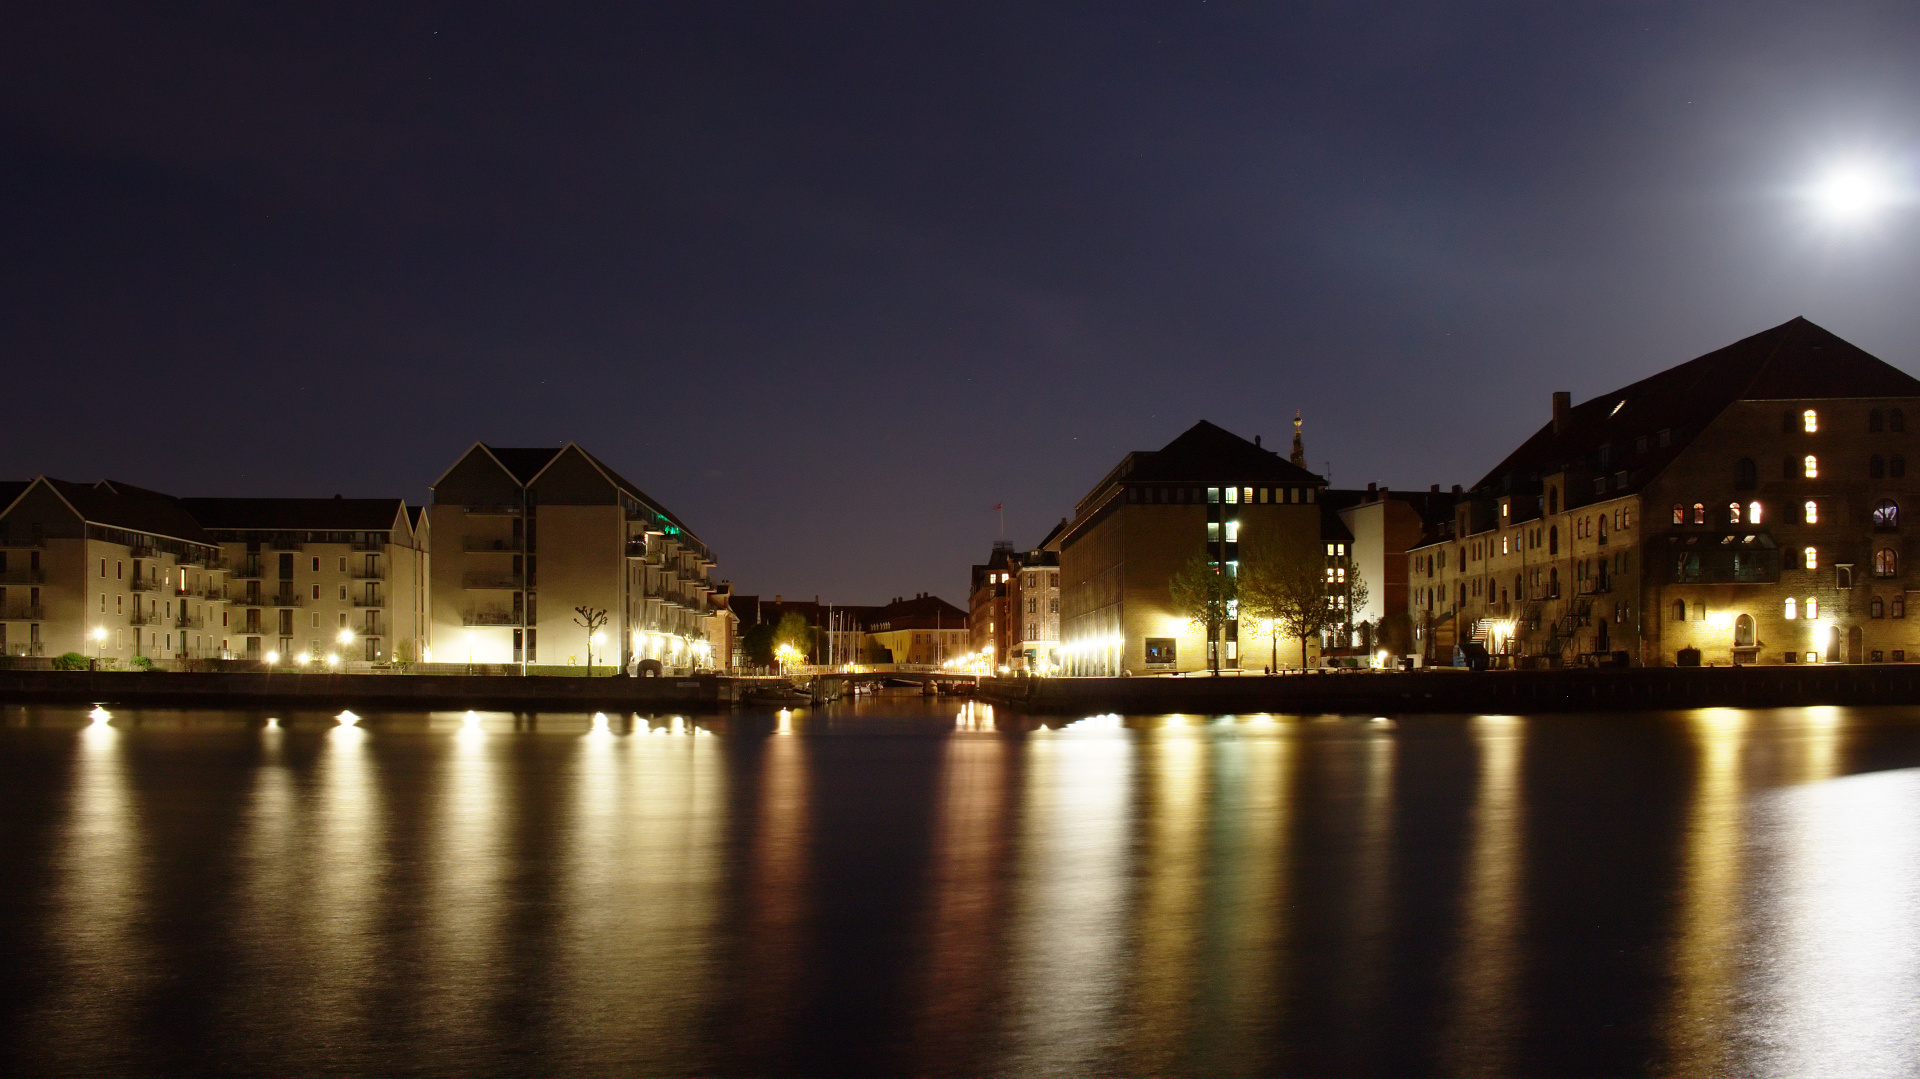 Christianhavns Kanal from Havnepromenade (Podróże » Kopenhaga » Miasto w nocy)